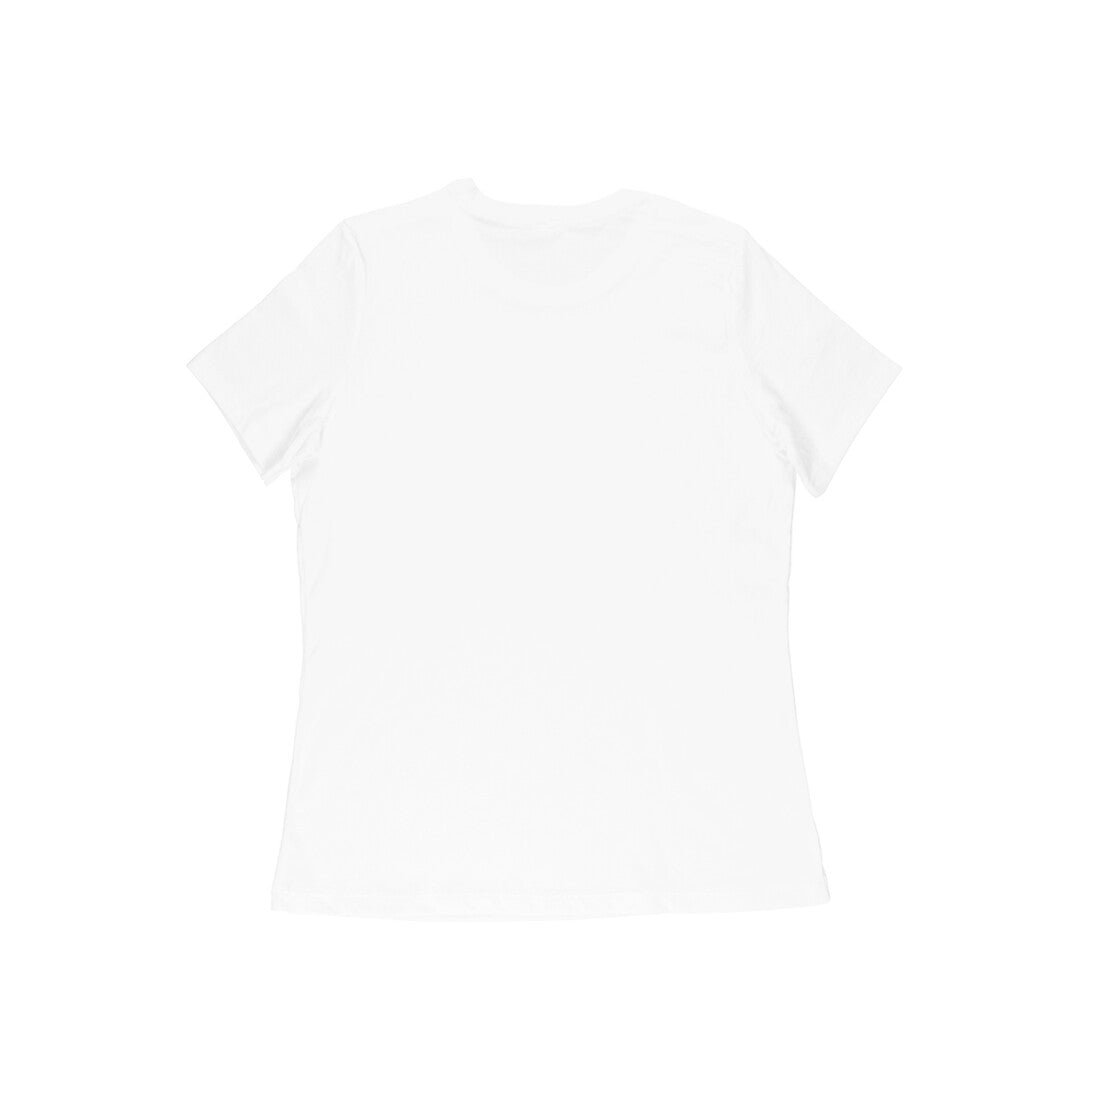 Zen AF. Yoga T-shirt